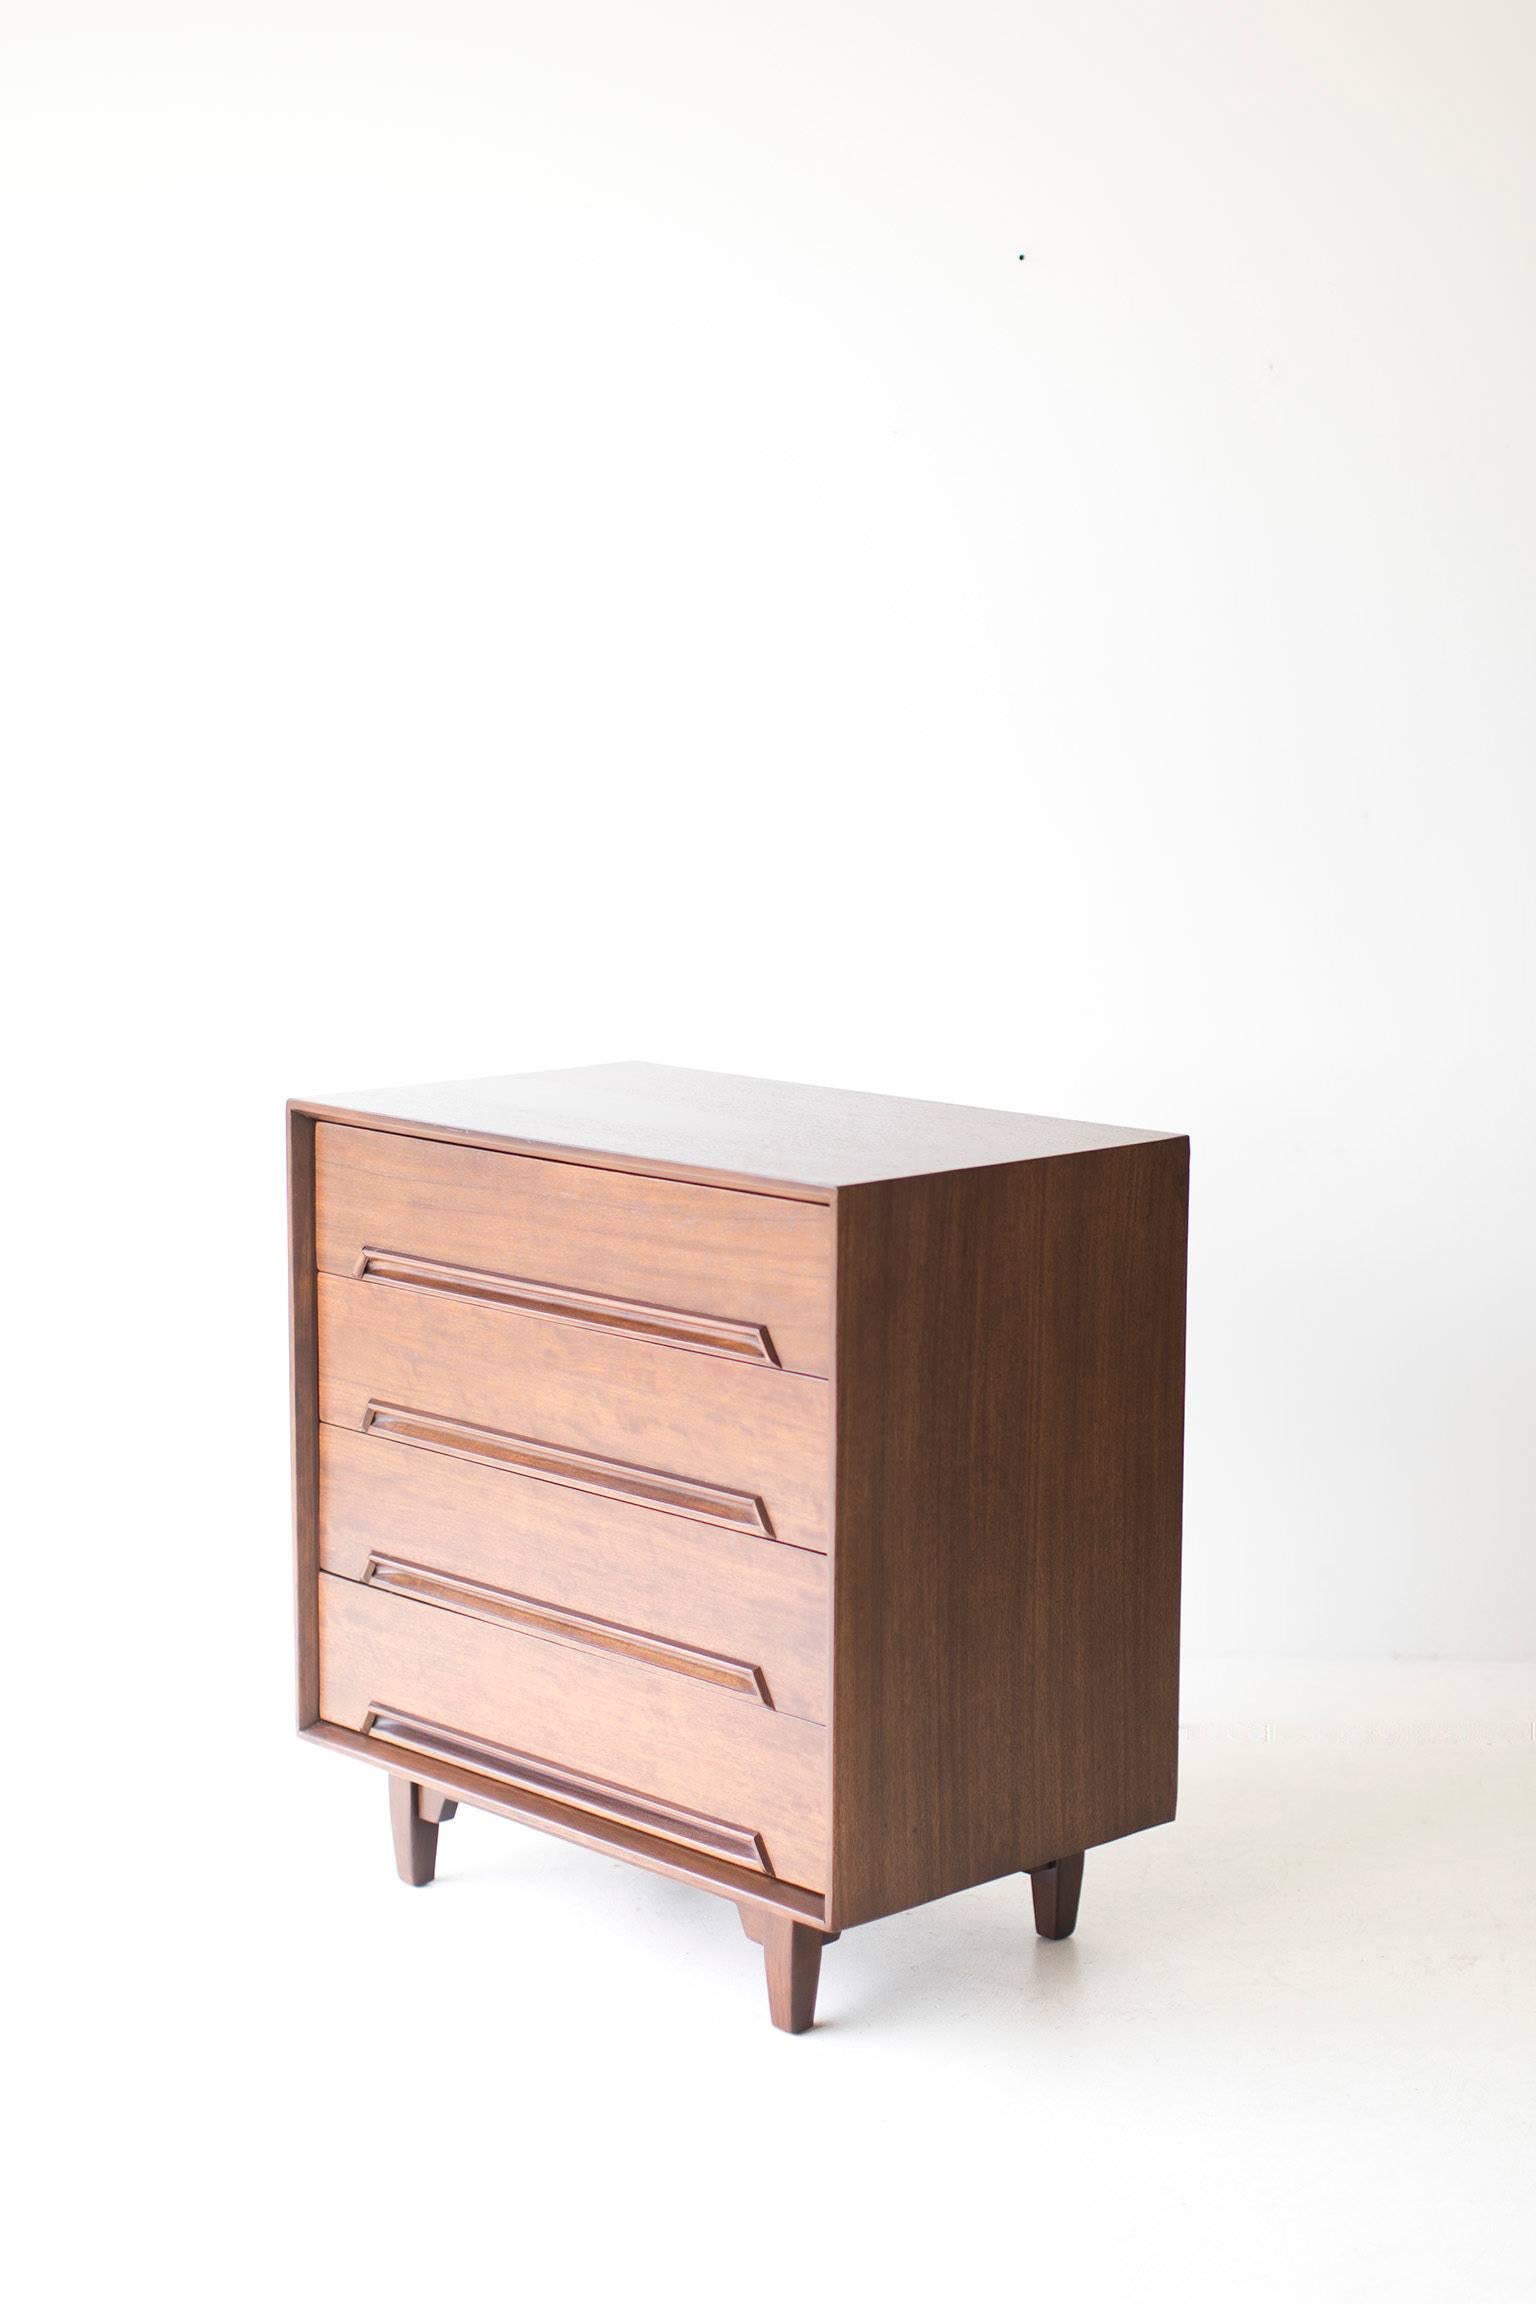 Milo Baughman Dresser for Drexel For Sale 1